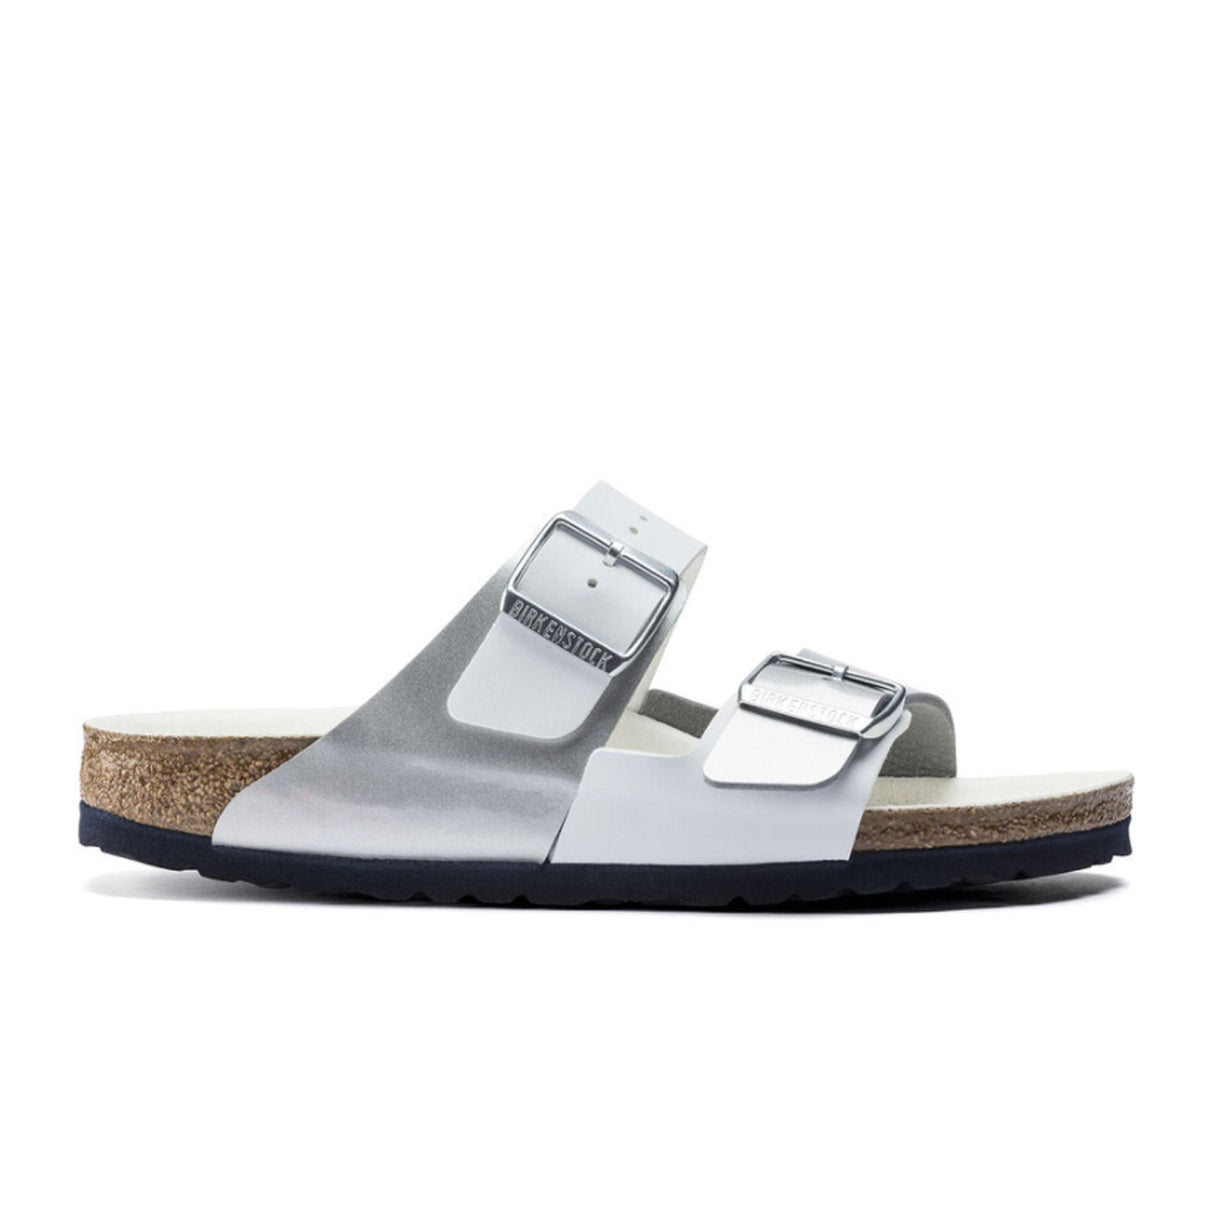 Birkenstock Arizona Split Birko-Flor Narrow Slide Sandal (Women) -  White/Silver